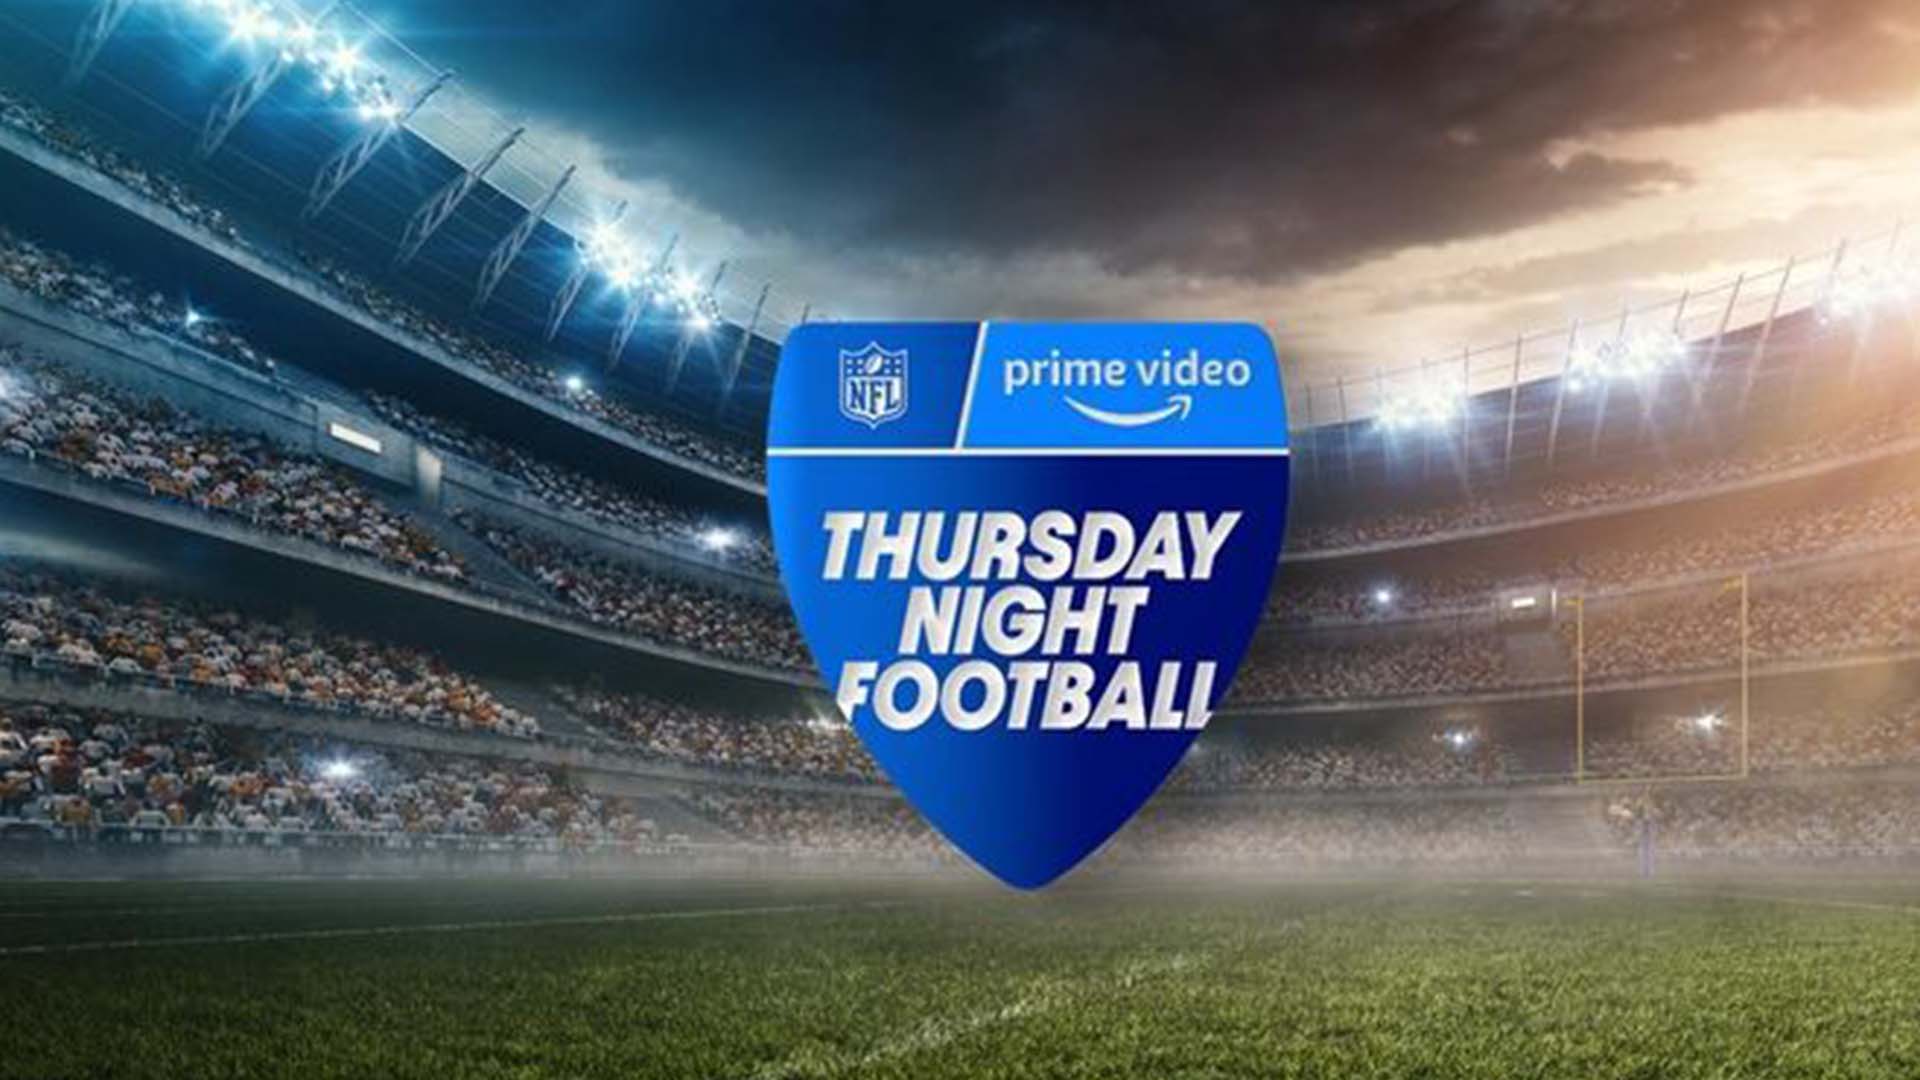 Thursday Night Football for Amazon 2022 NFL technology